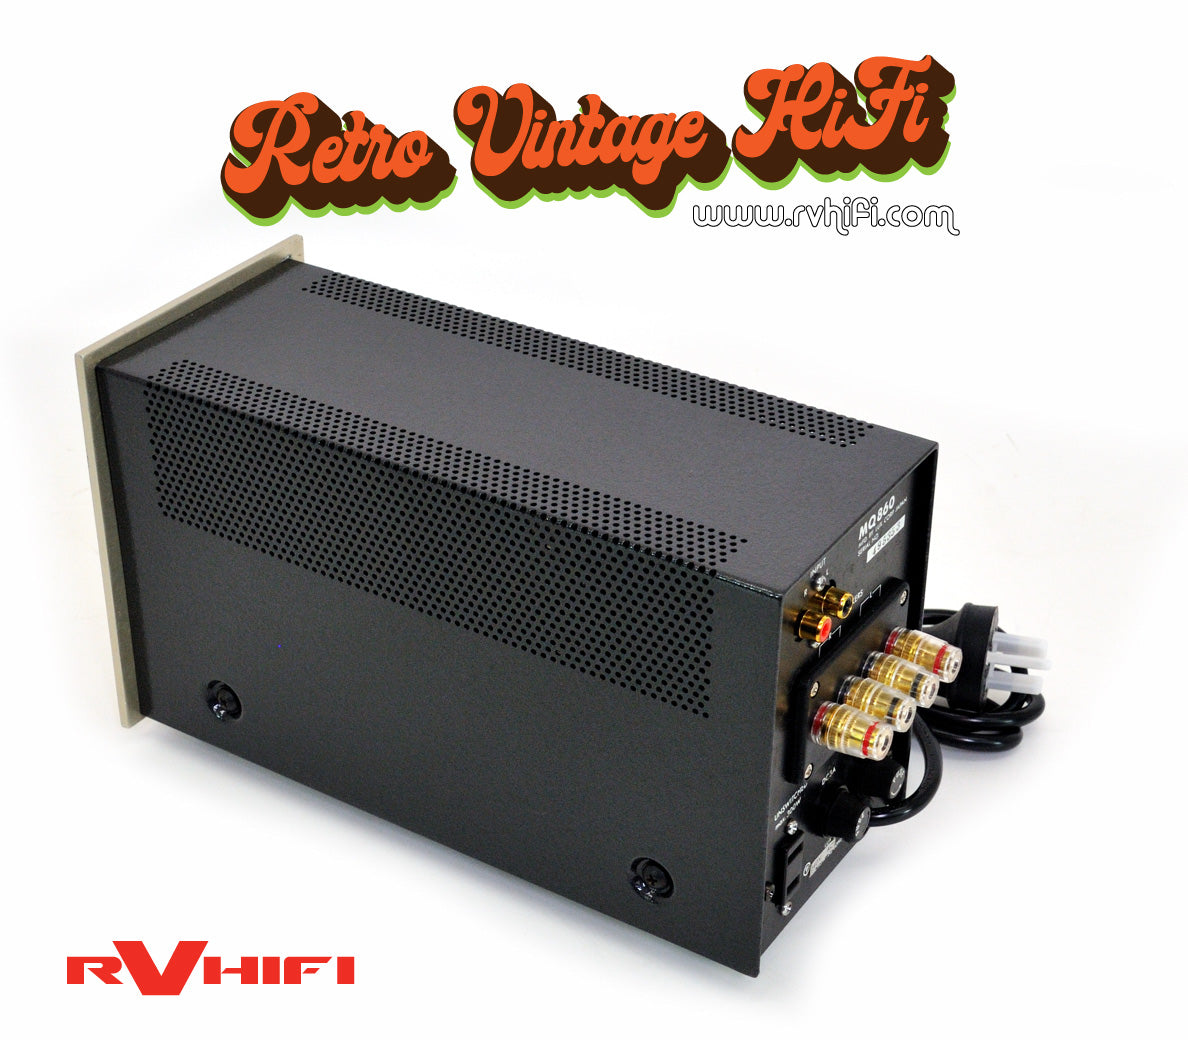 Luxman MQ-860 Power Amp Vintage Amplifier RV HI FI